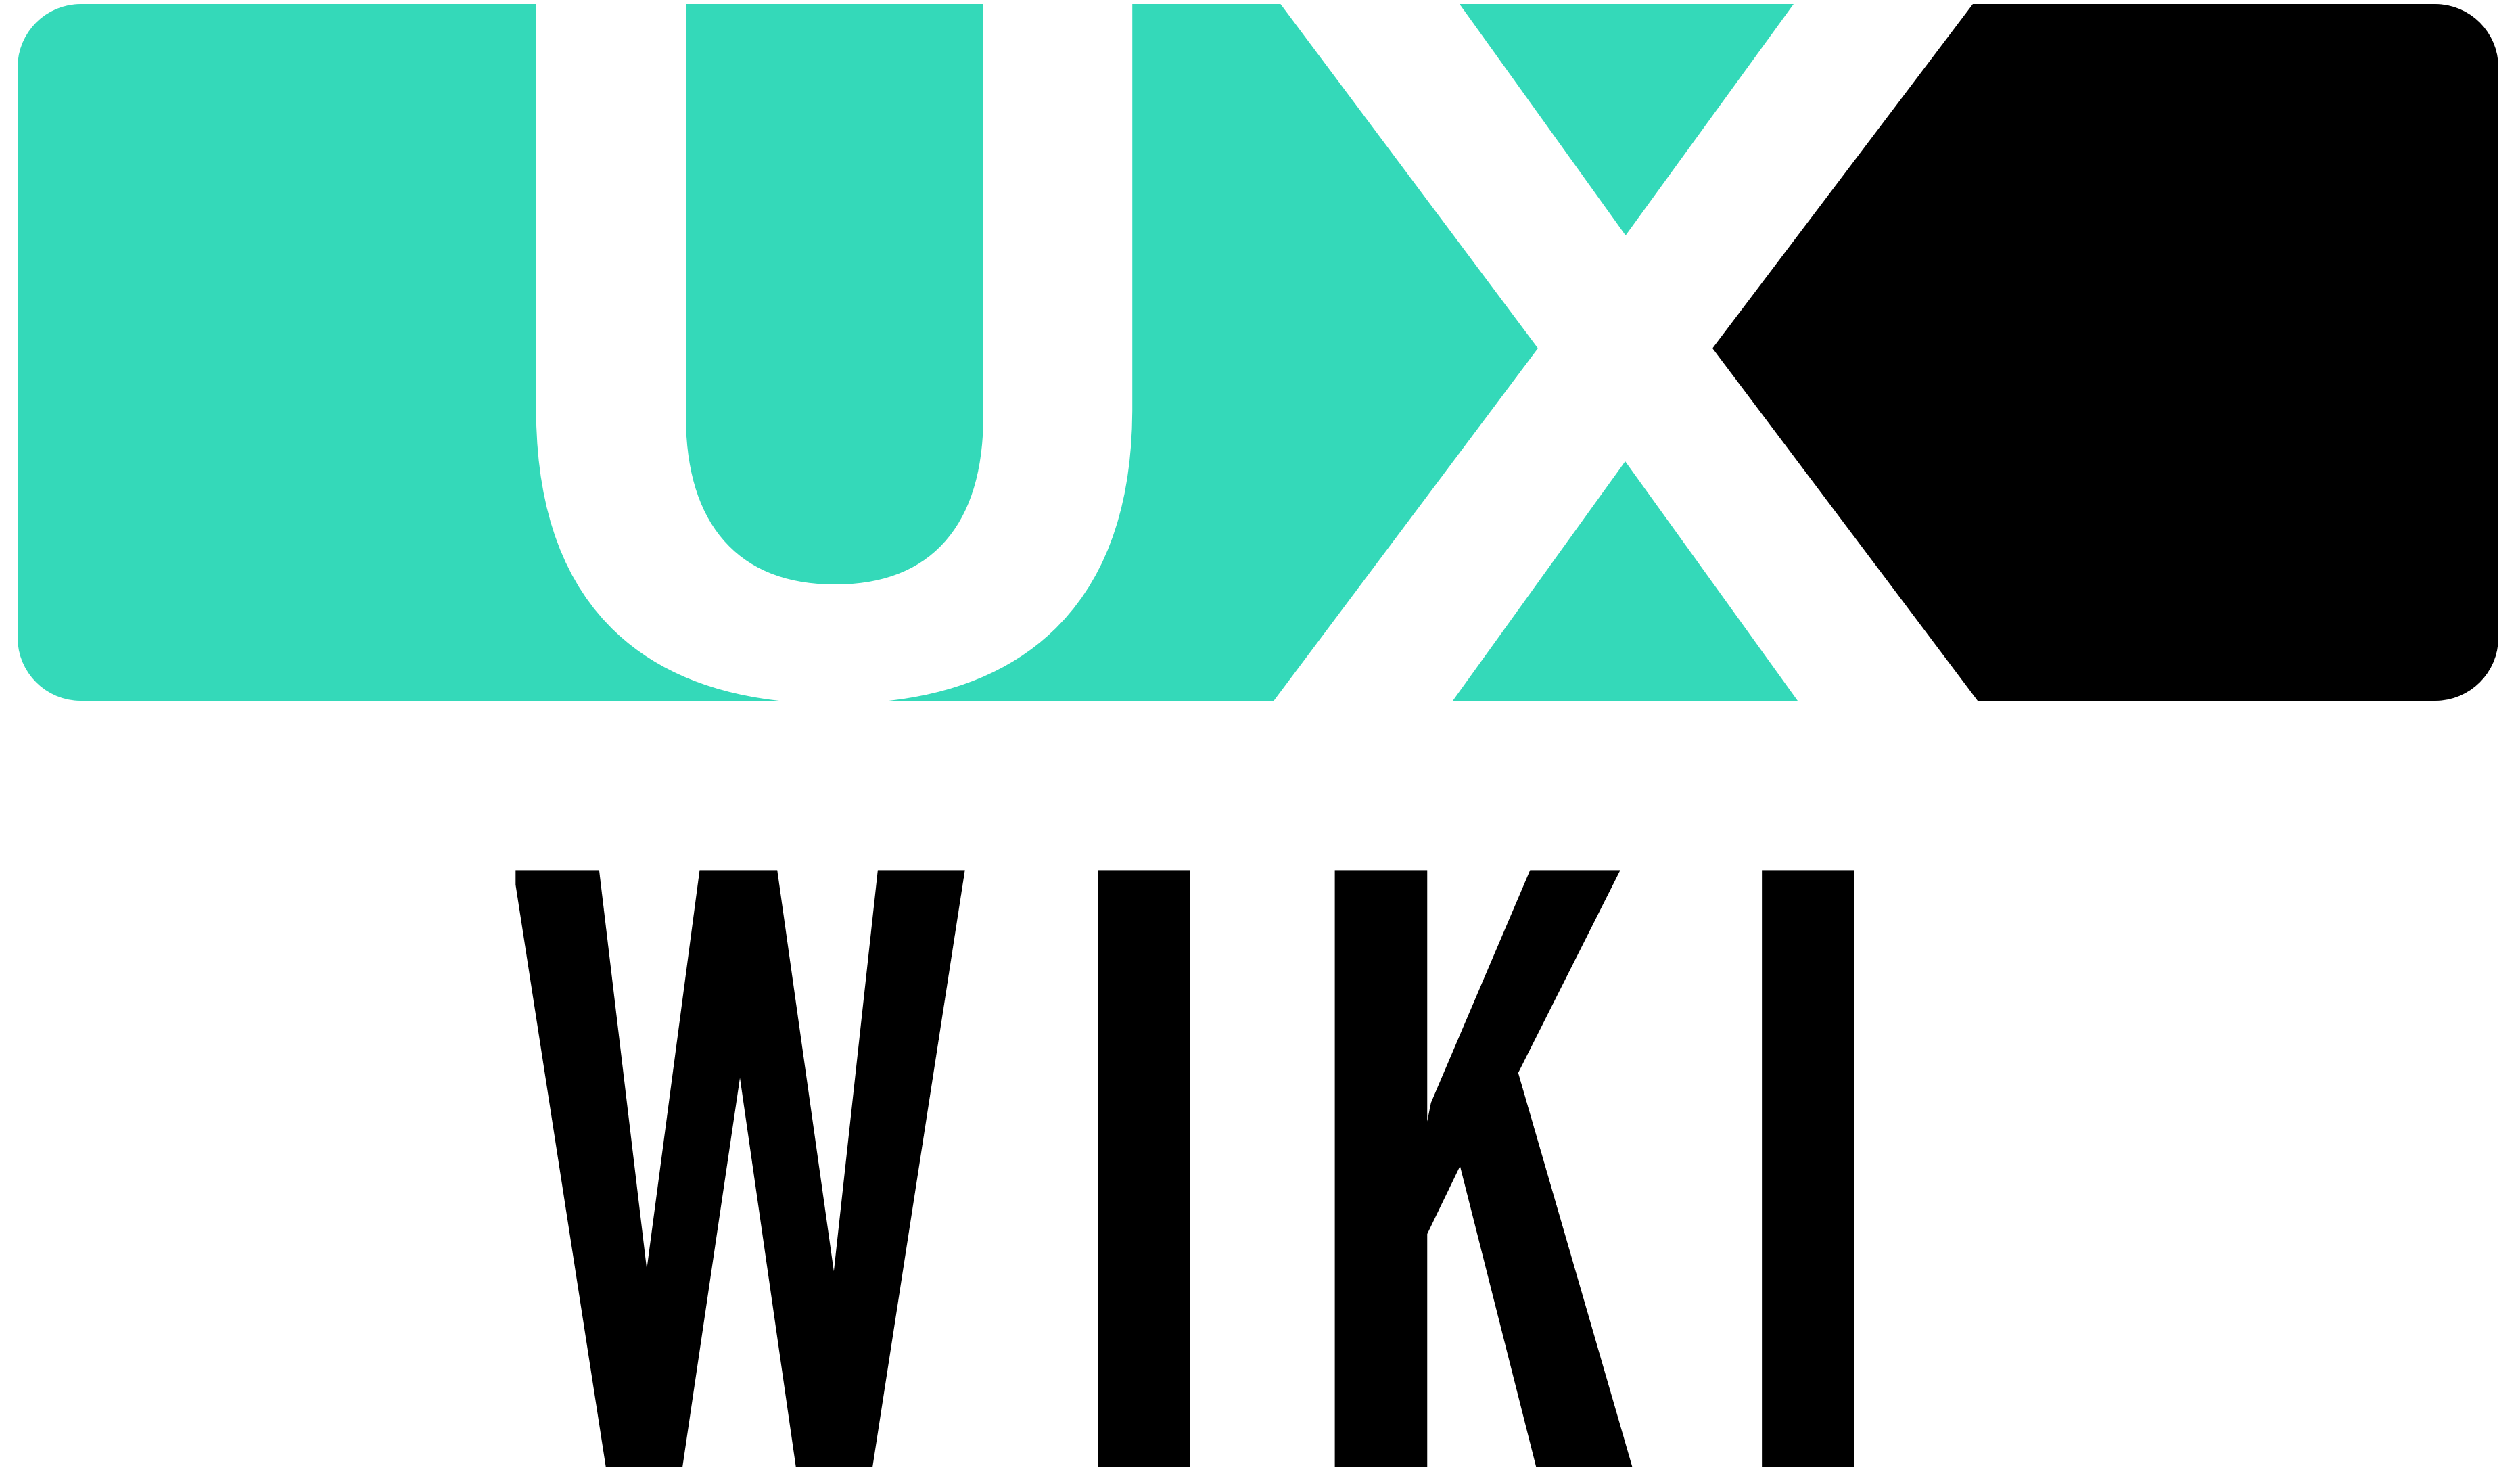 Ux wiki